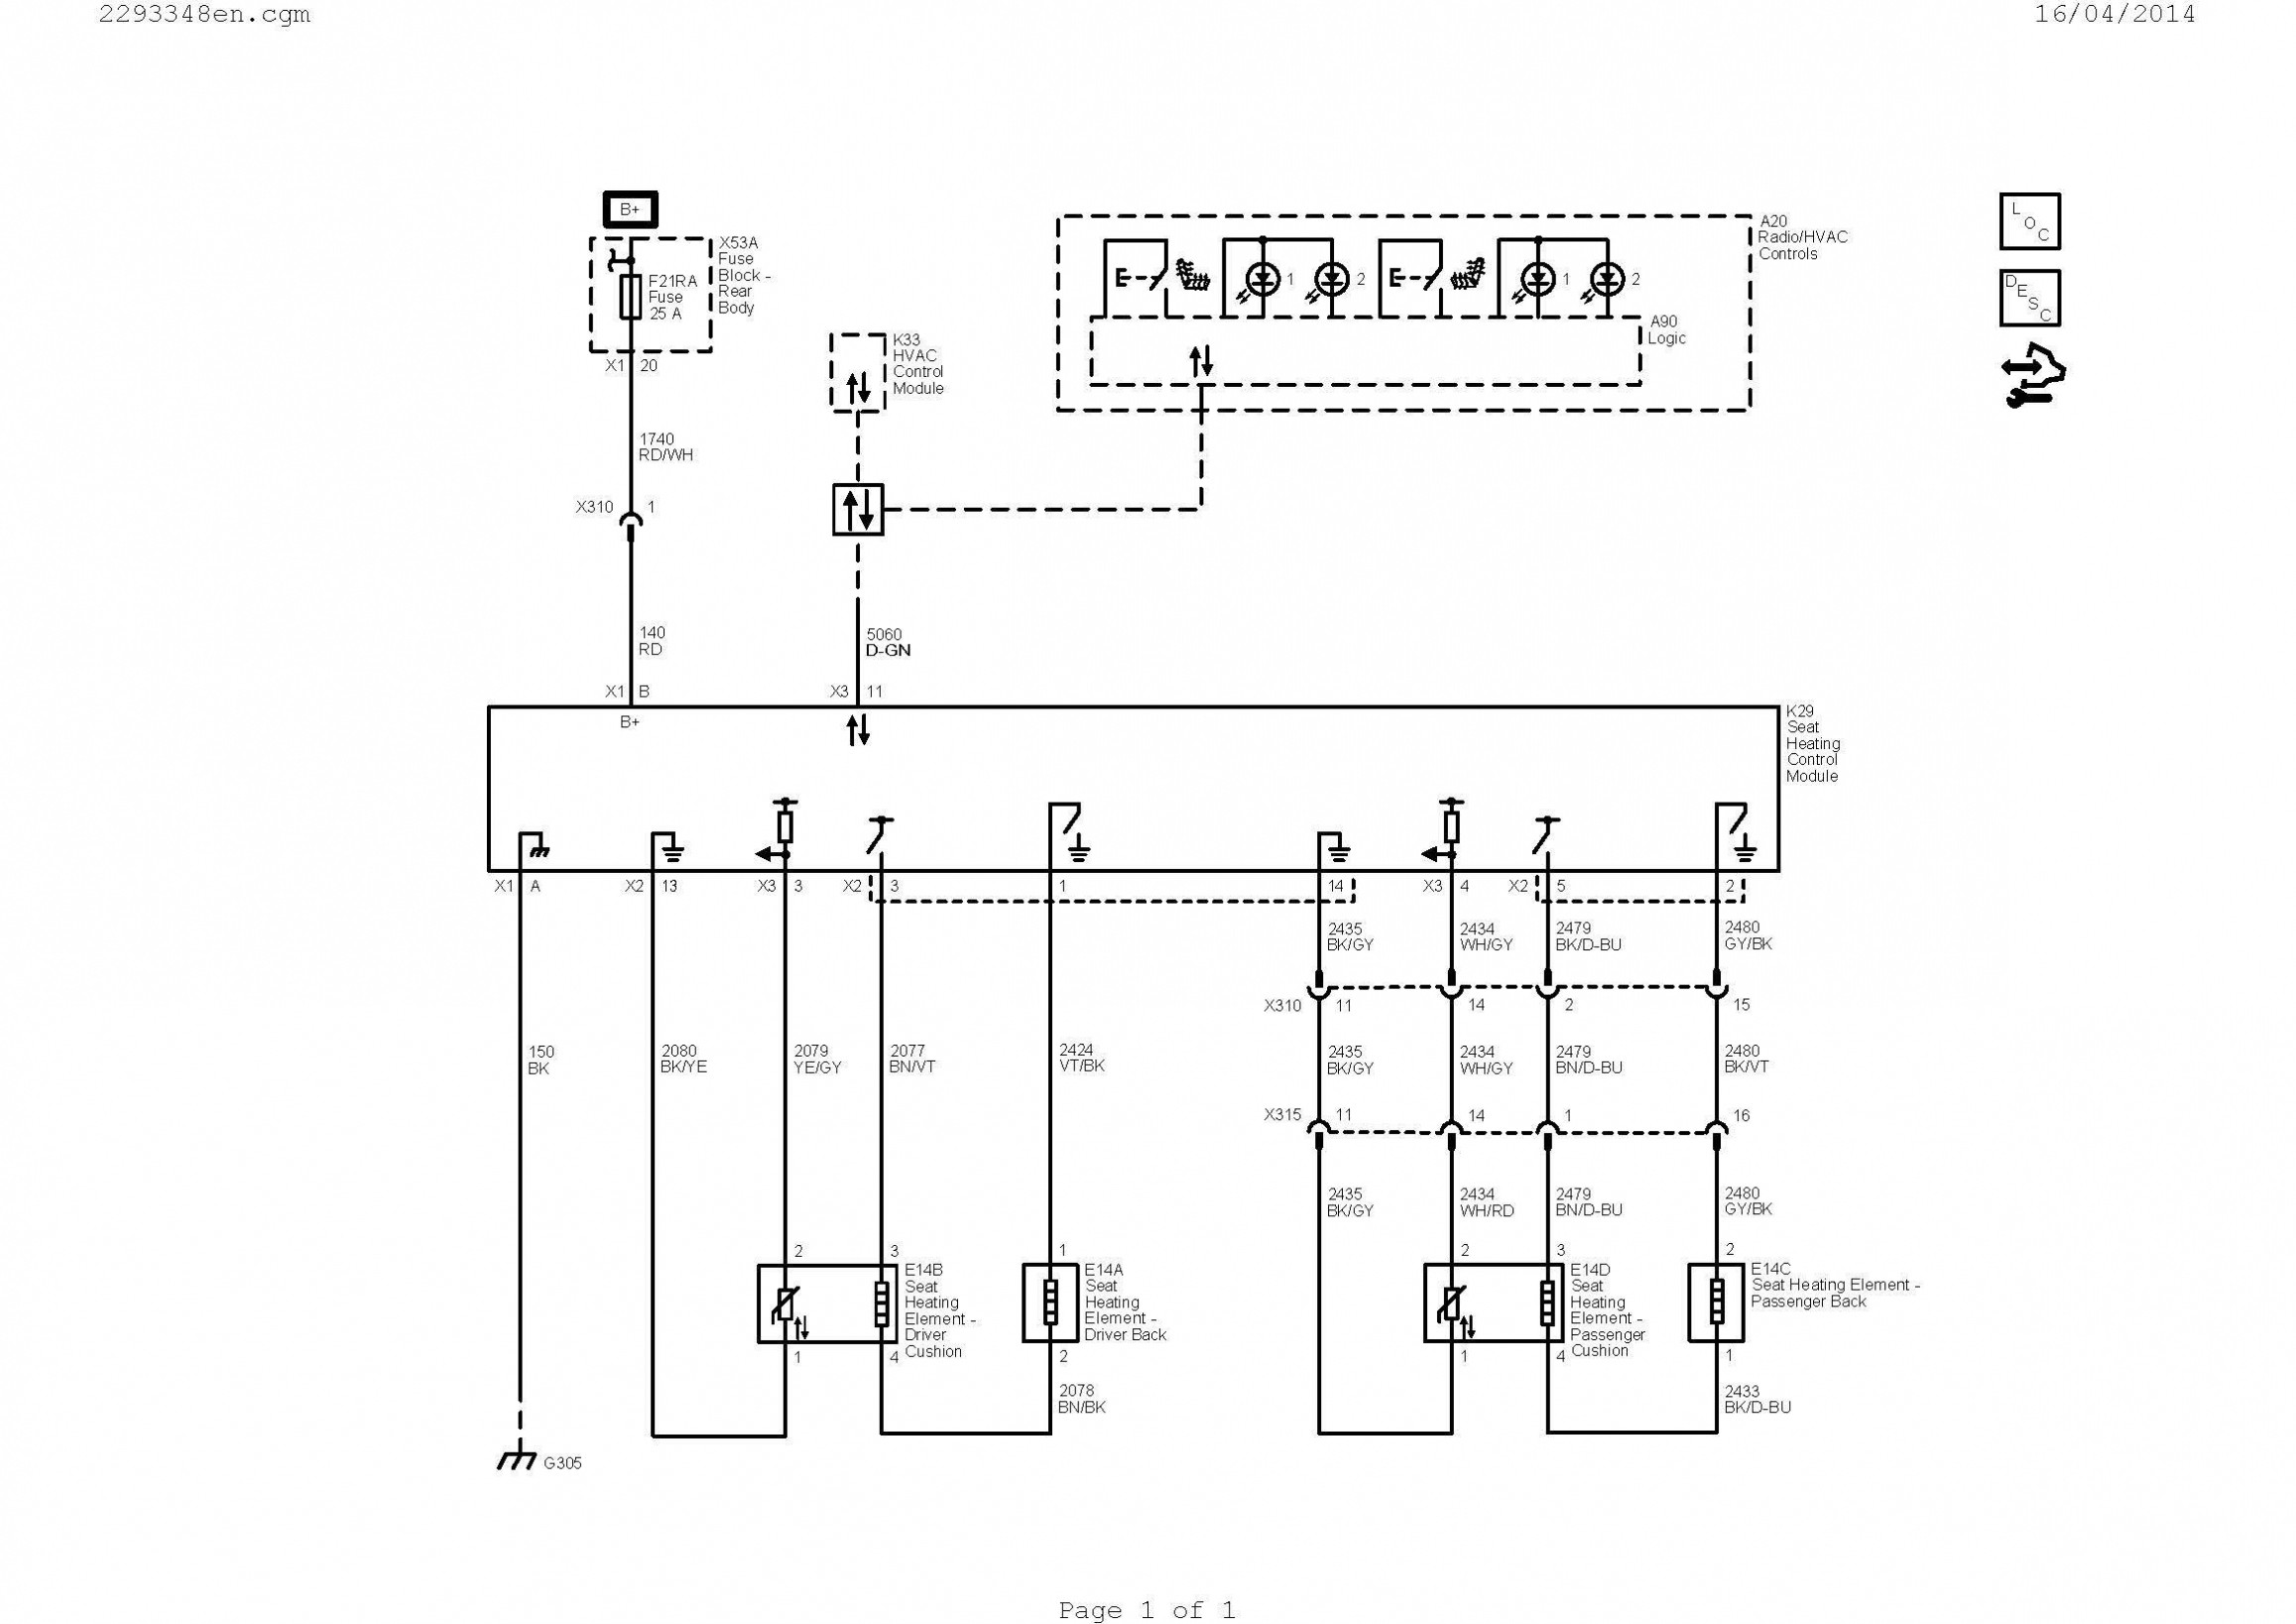 1997 chevy s10 wiring diagram collection wiring diagram rh magnusrosen net 2000 S10 Pickup Wiring Diagram